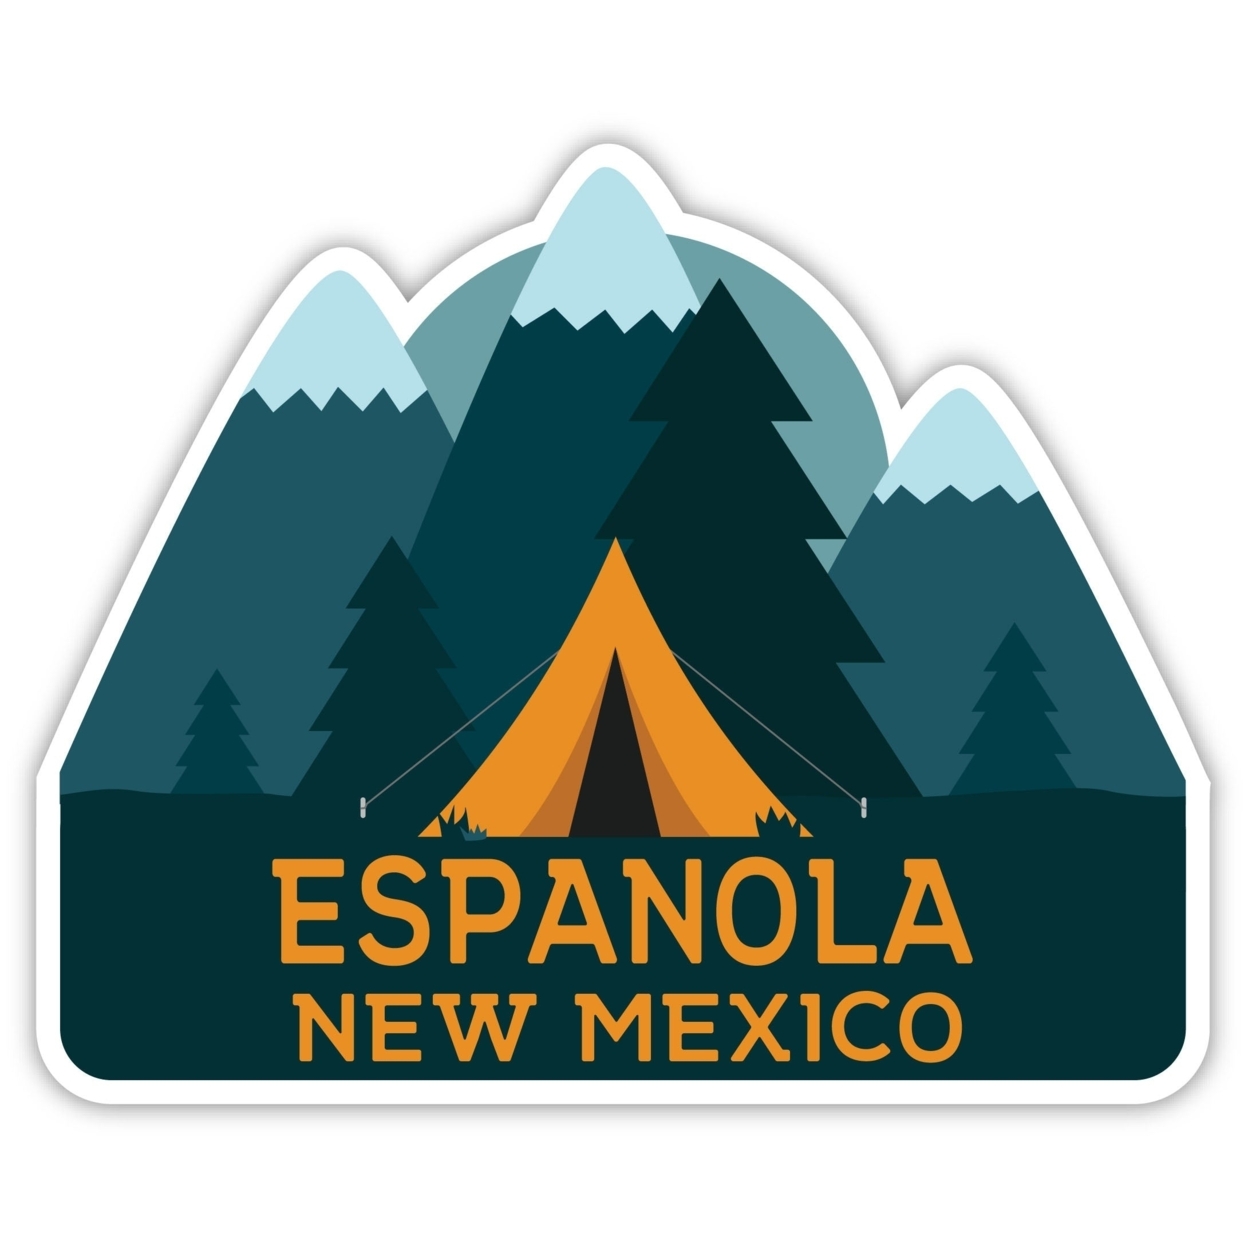 Espanola New Mexico Souvenir Decorative Stickers (Choose Theme And Size) - Single Unit, 4-Inch, Tent